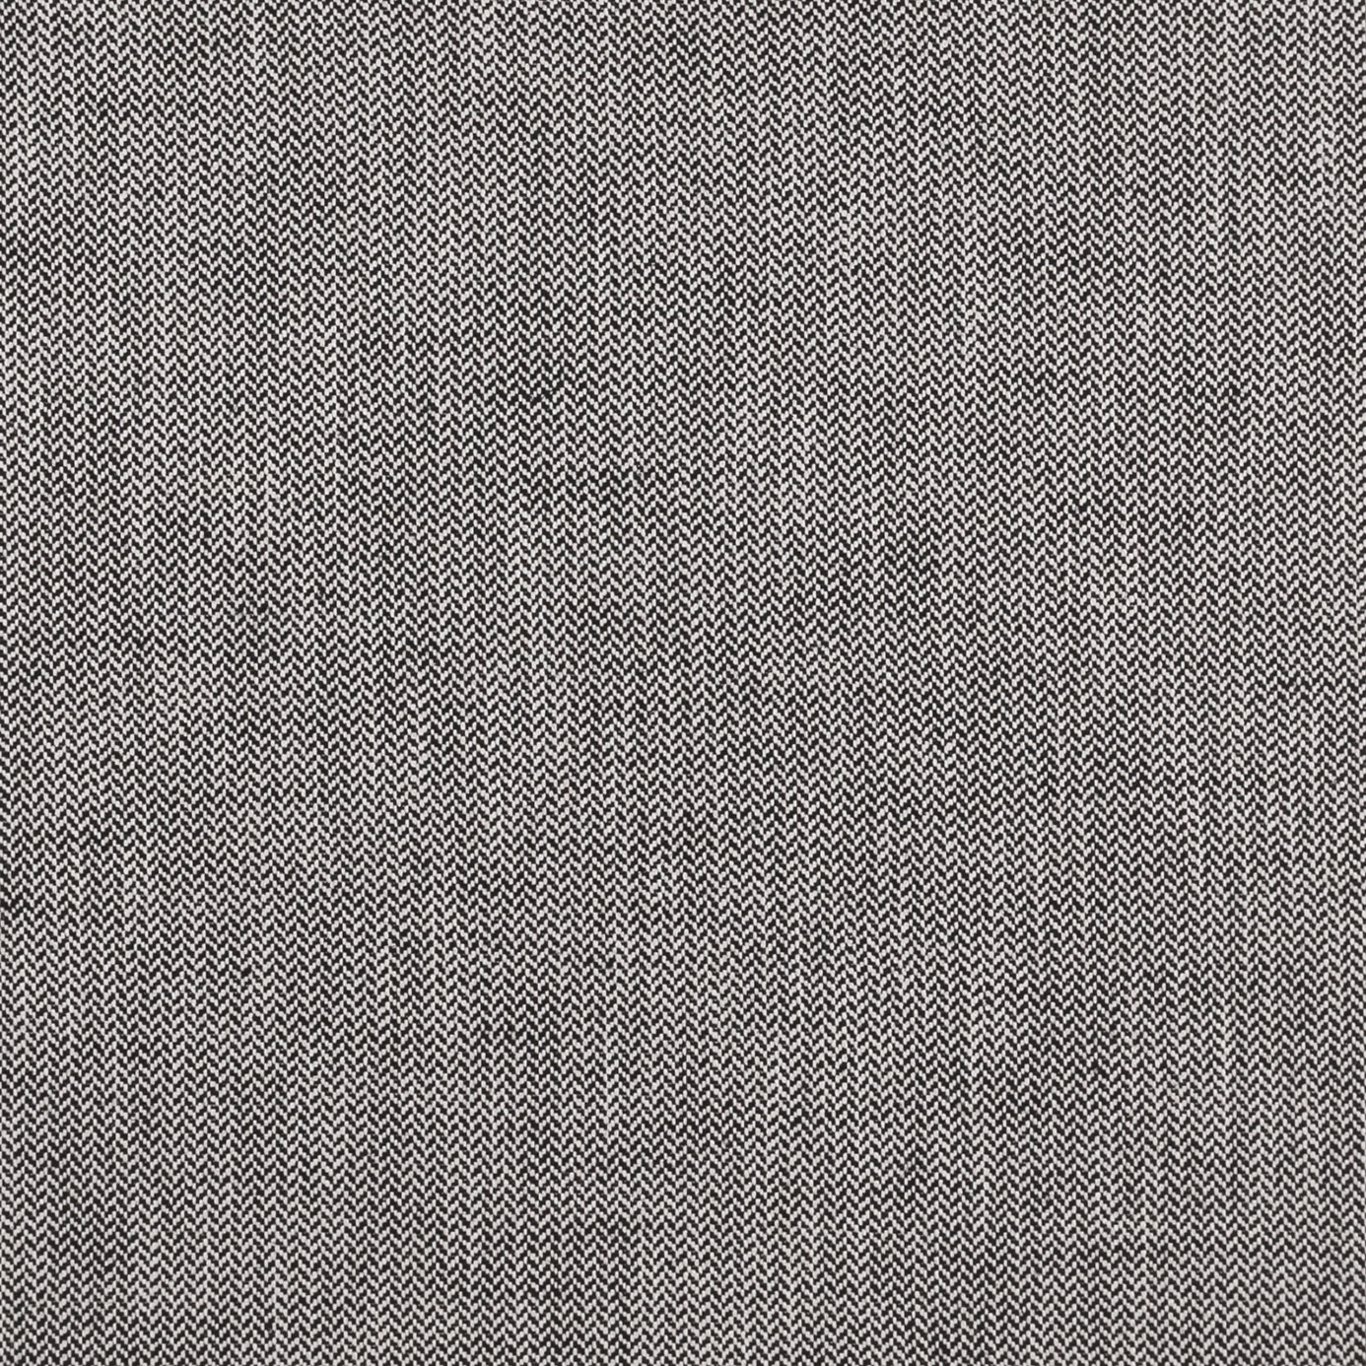 BW1003 Black/White Fabric by CNC